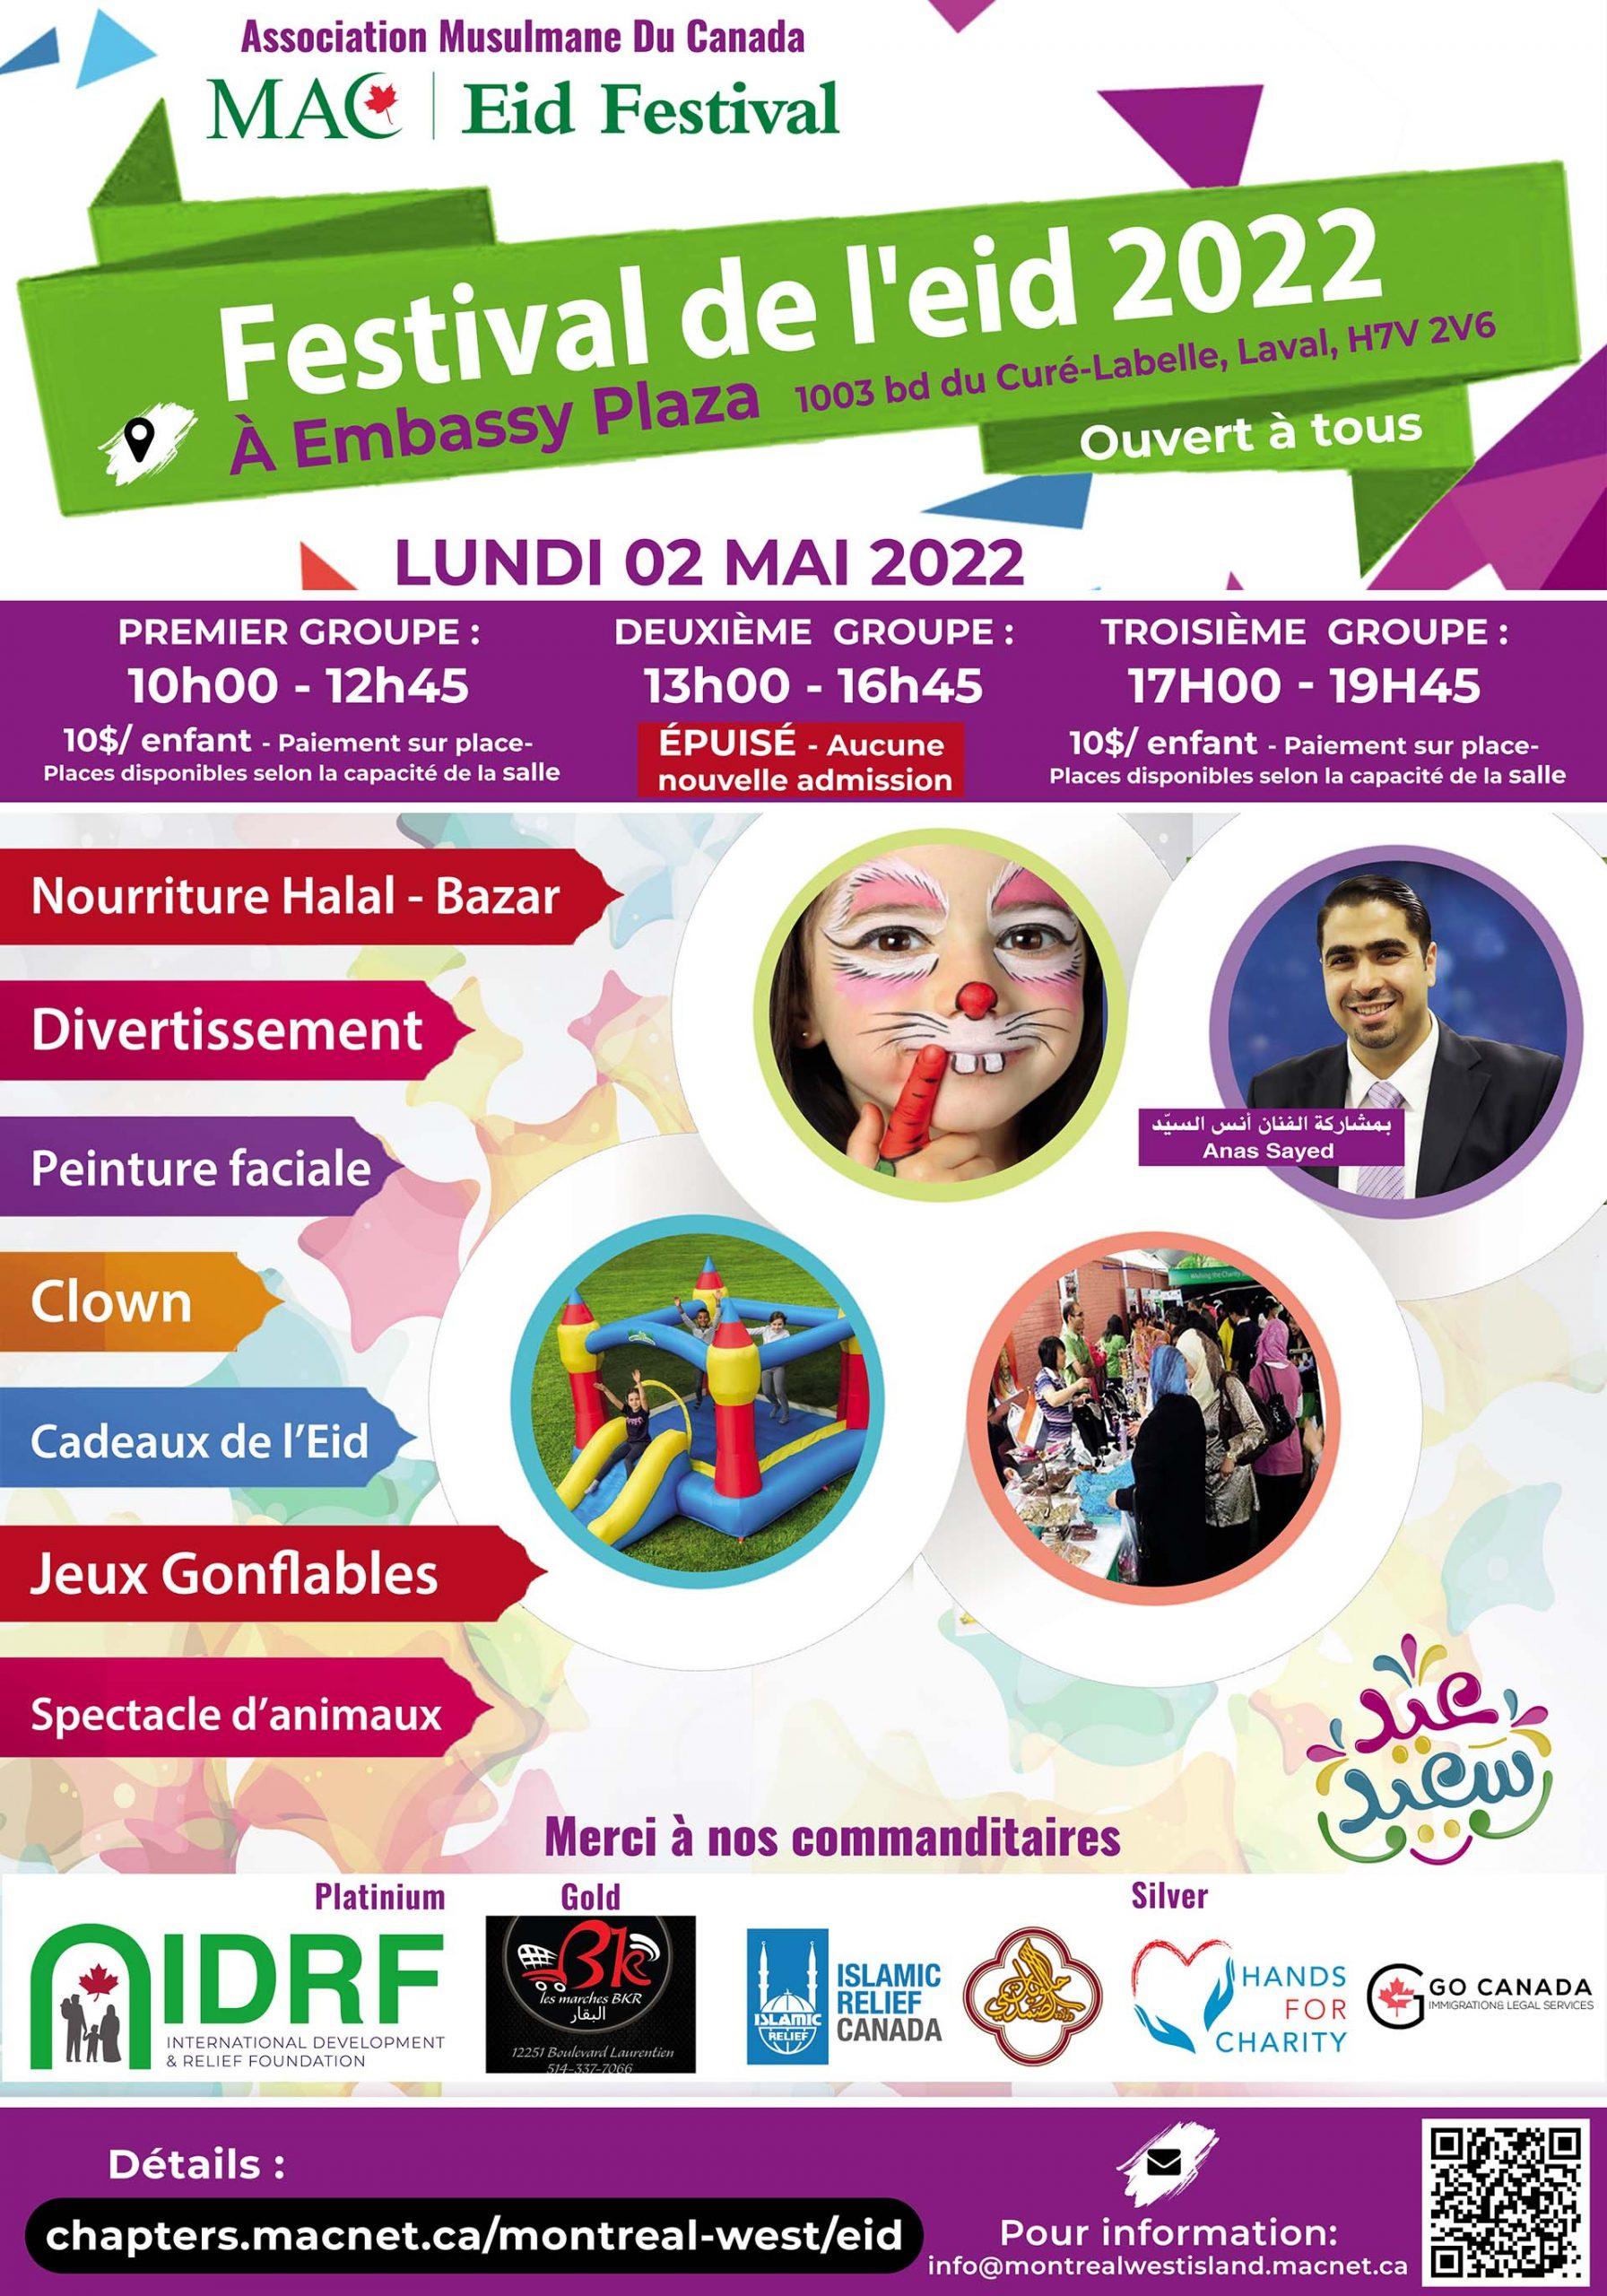 Festival de l’Eid de MAC Mai 2022 – Montreal West Chapter